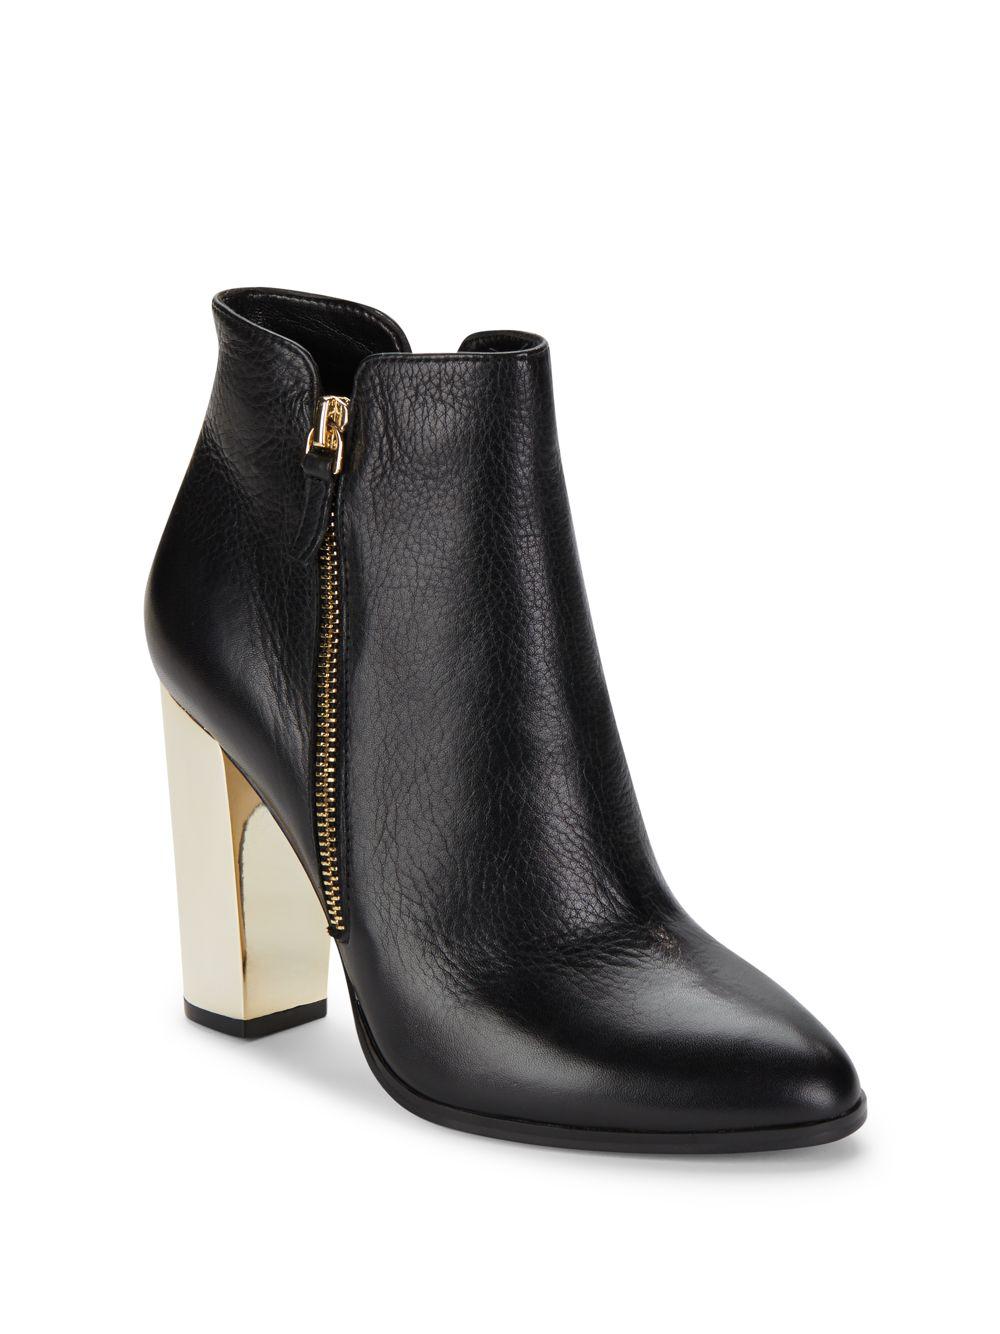 Saks Fifth Avenue Hallie Leather Booties in Black - Lyst